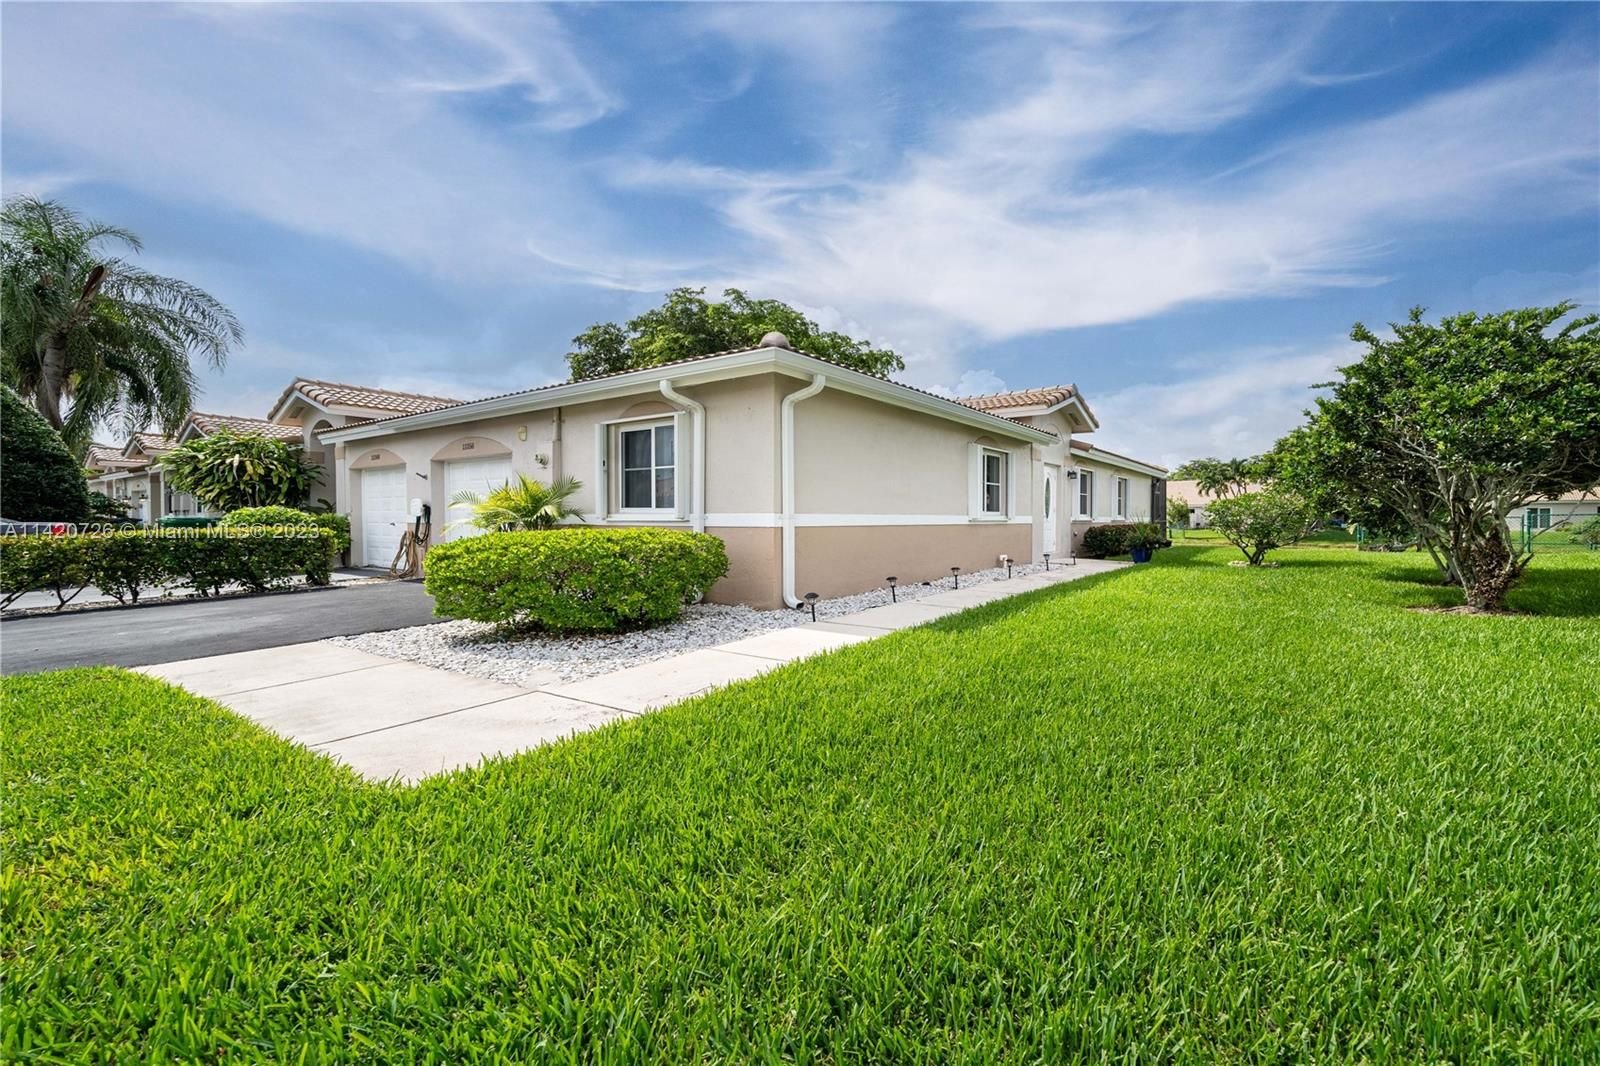 Real estate property located at 11356 17th Ct, Broward County, Miramar, FL